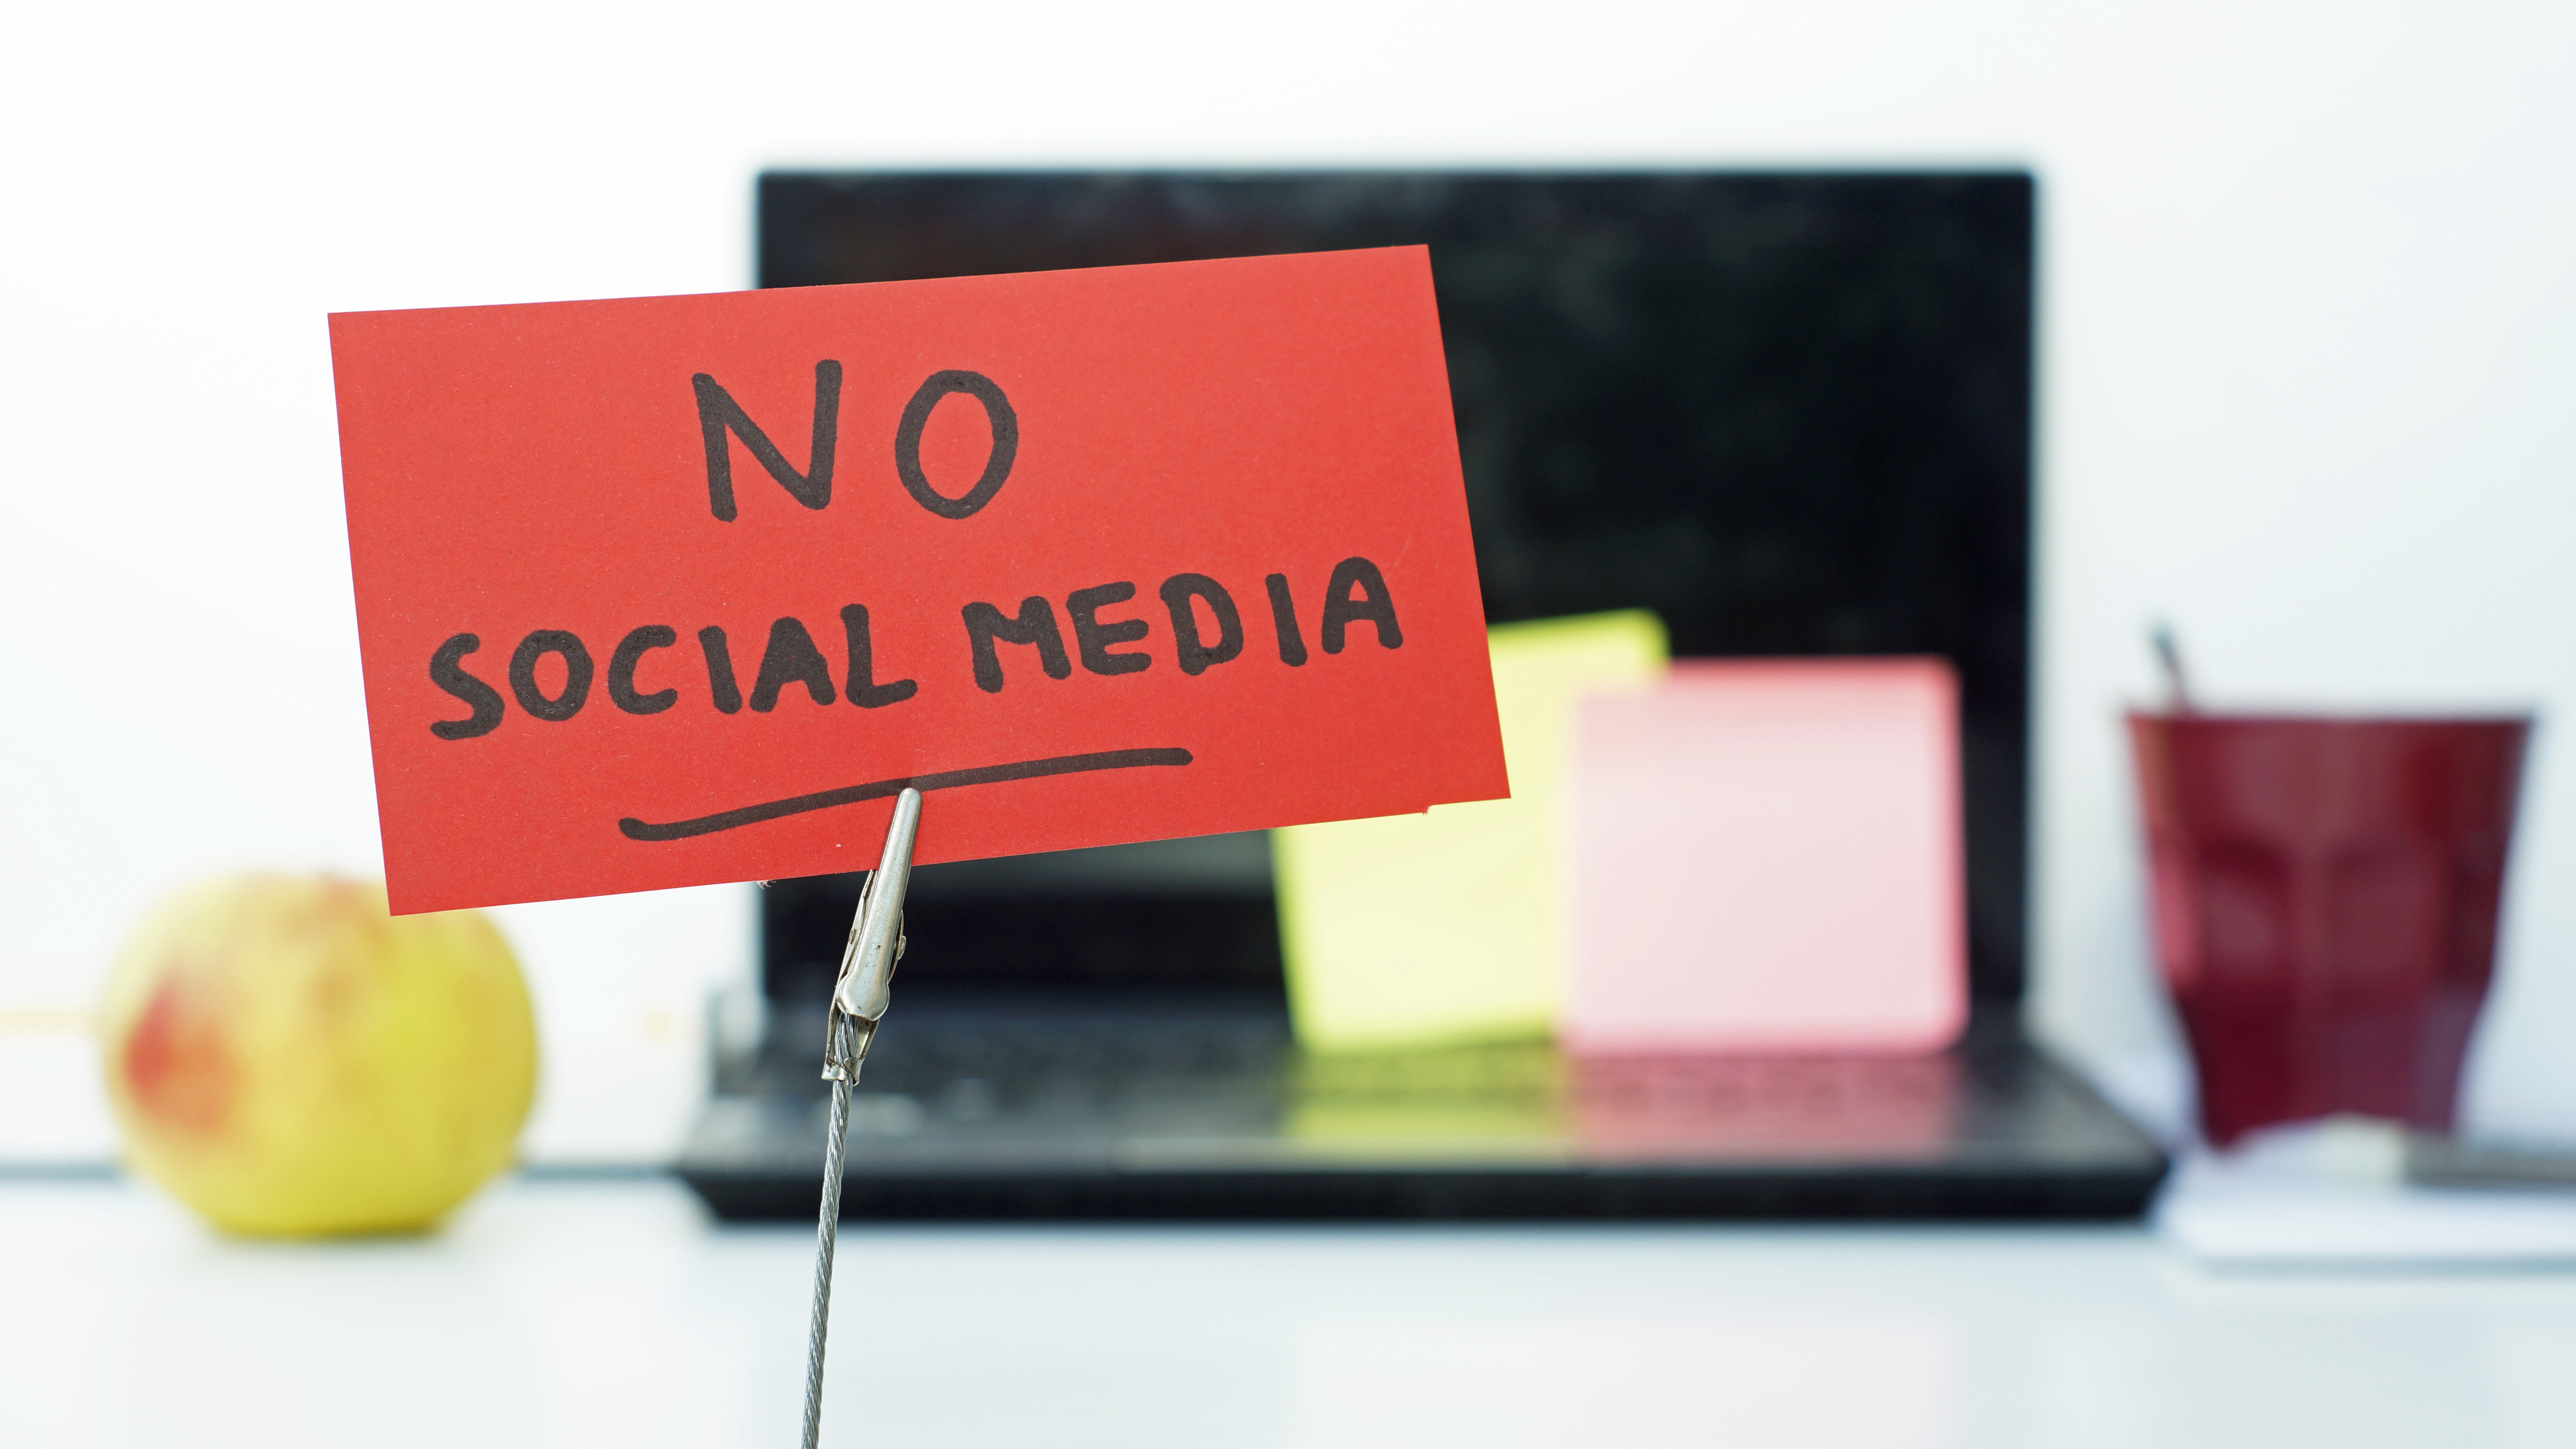 School urges students to shun social media